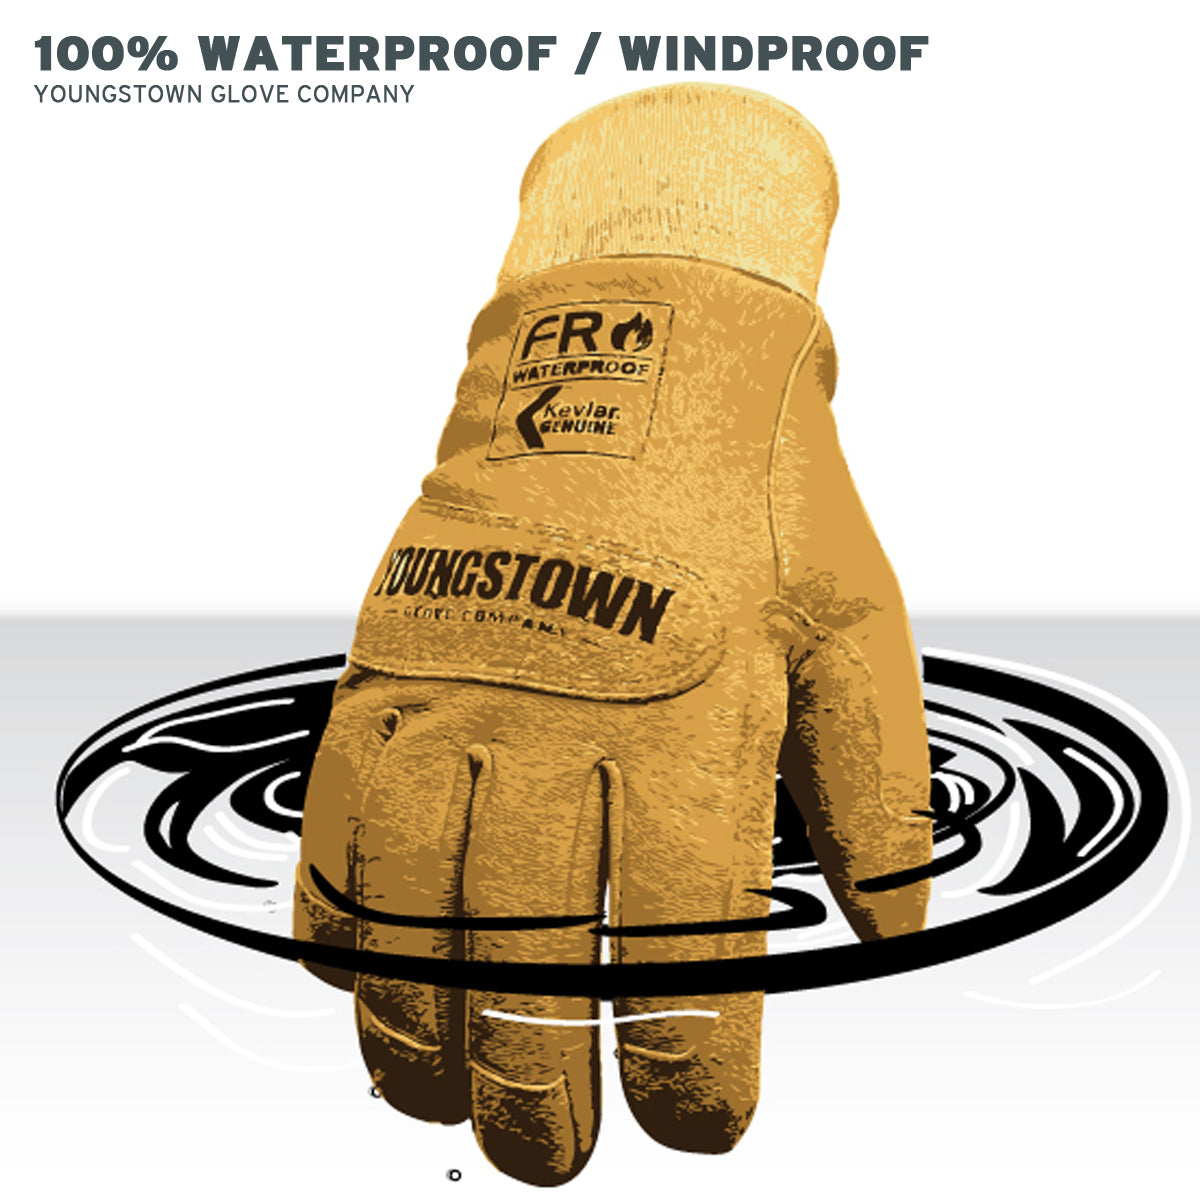 FR Waterproof Ground Glove - Youngstown